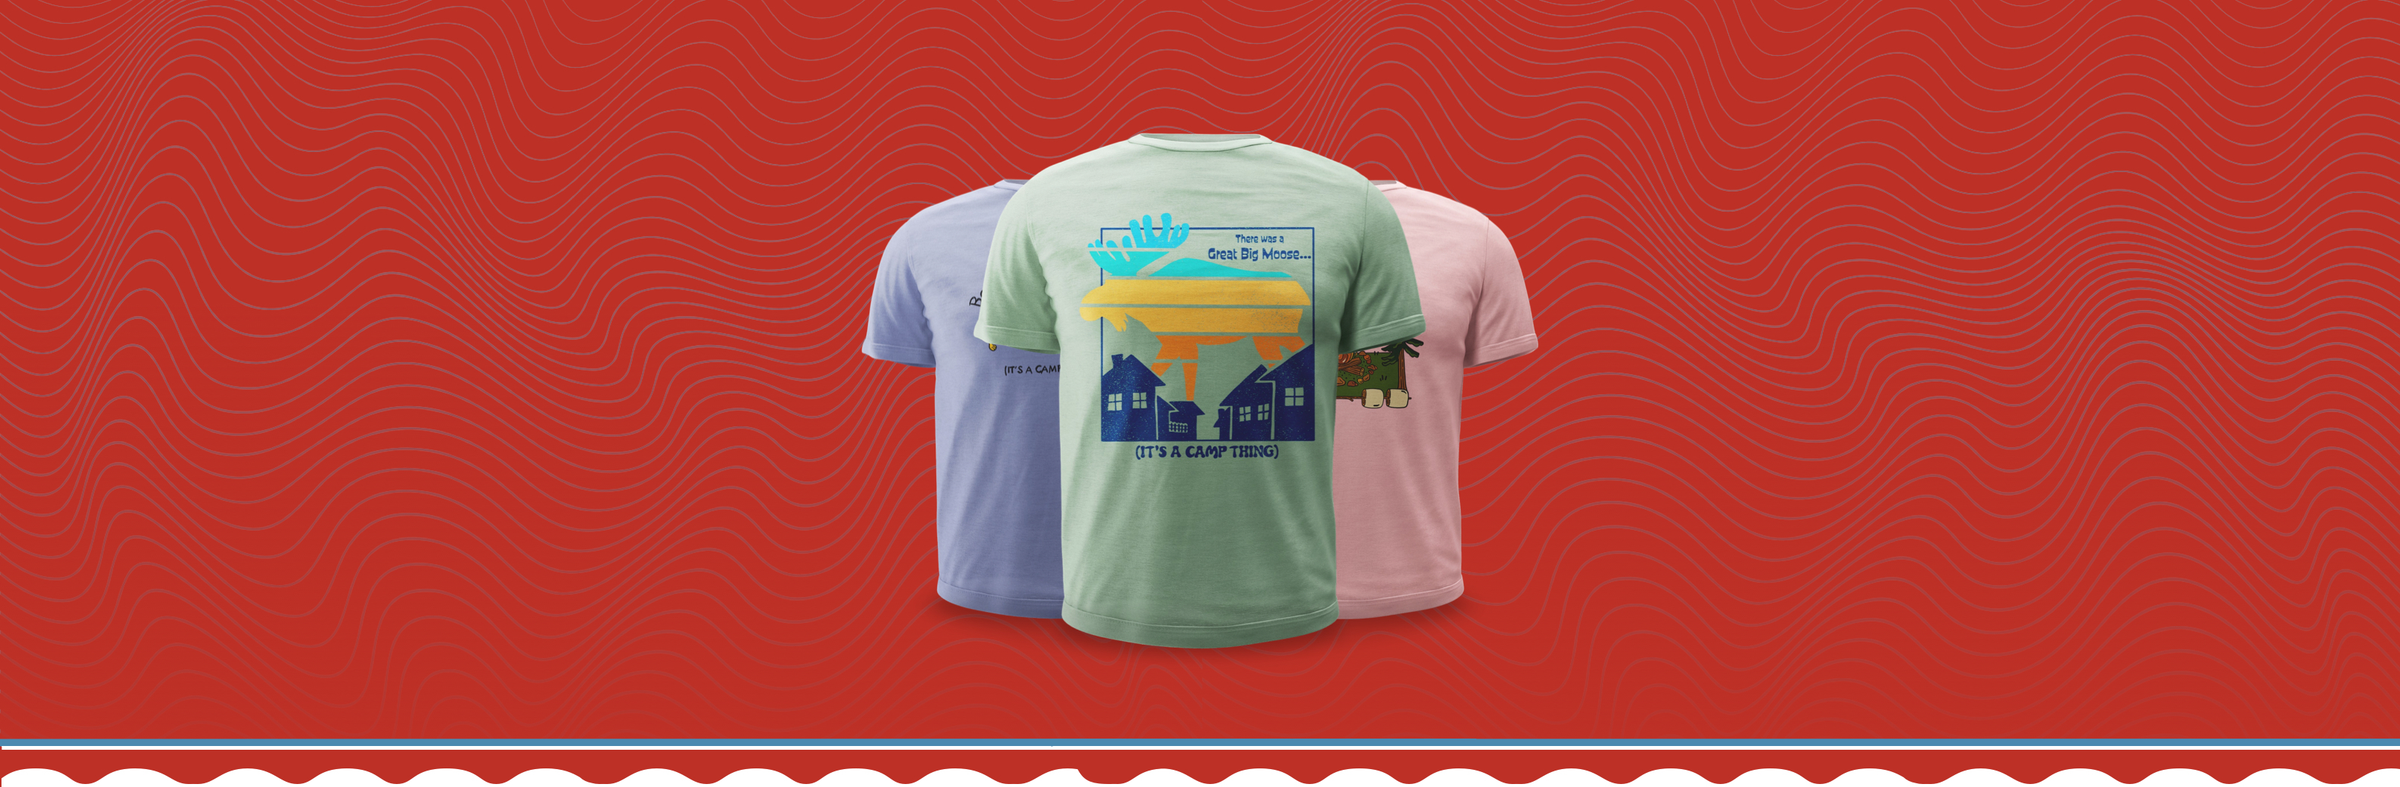 Fun Summer Camp Themed T-Shirts